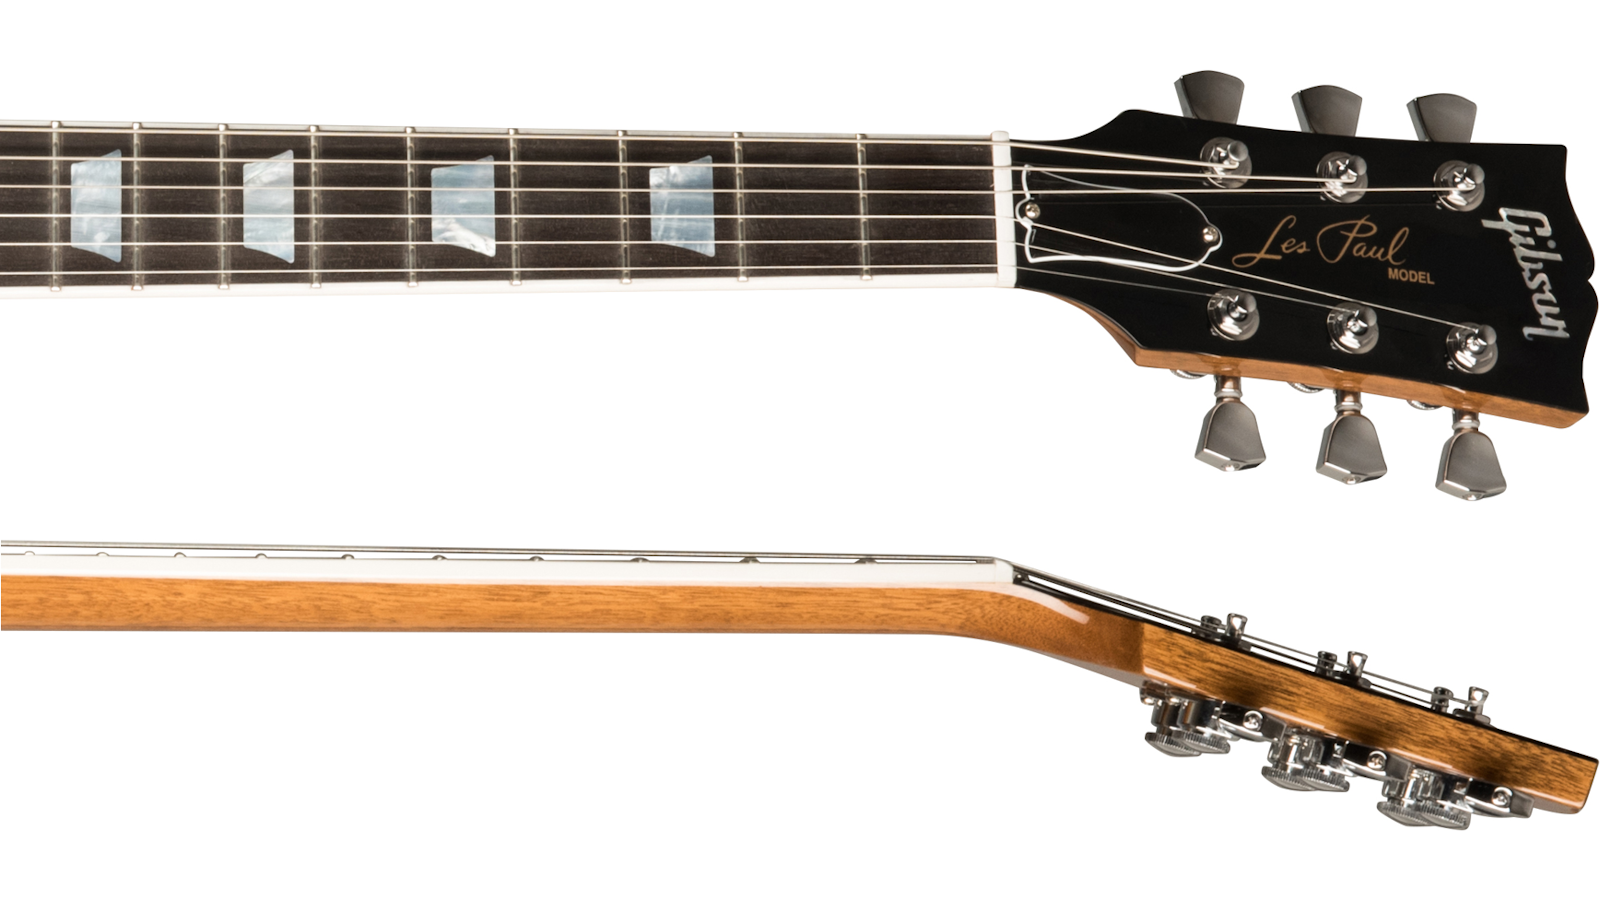 Les Paul Modern | Gibson Japan